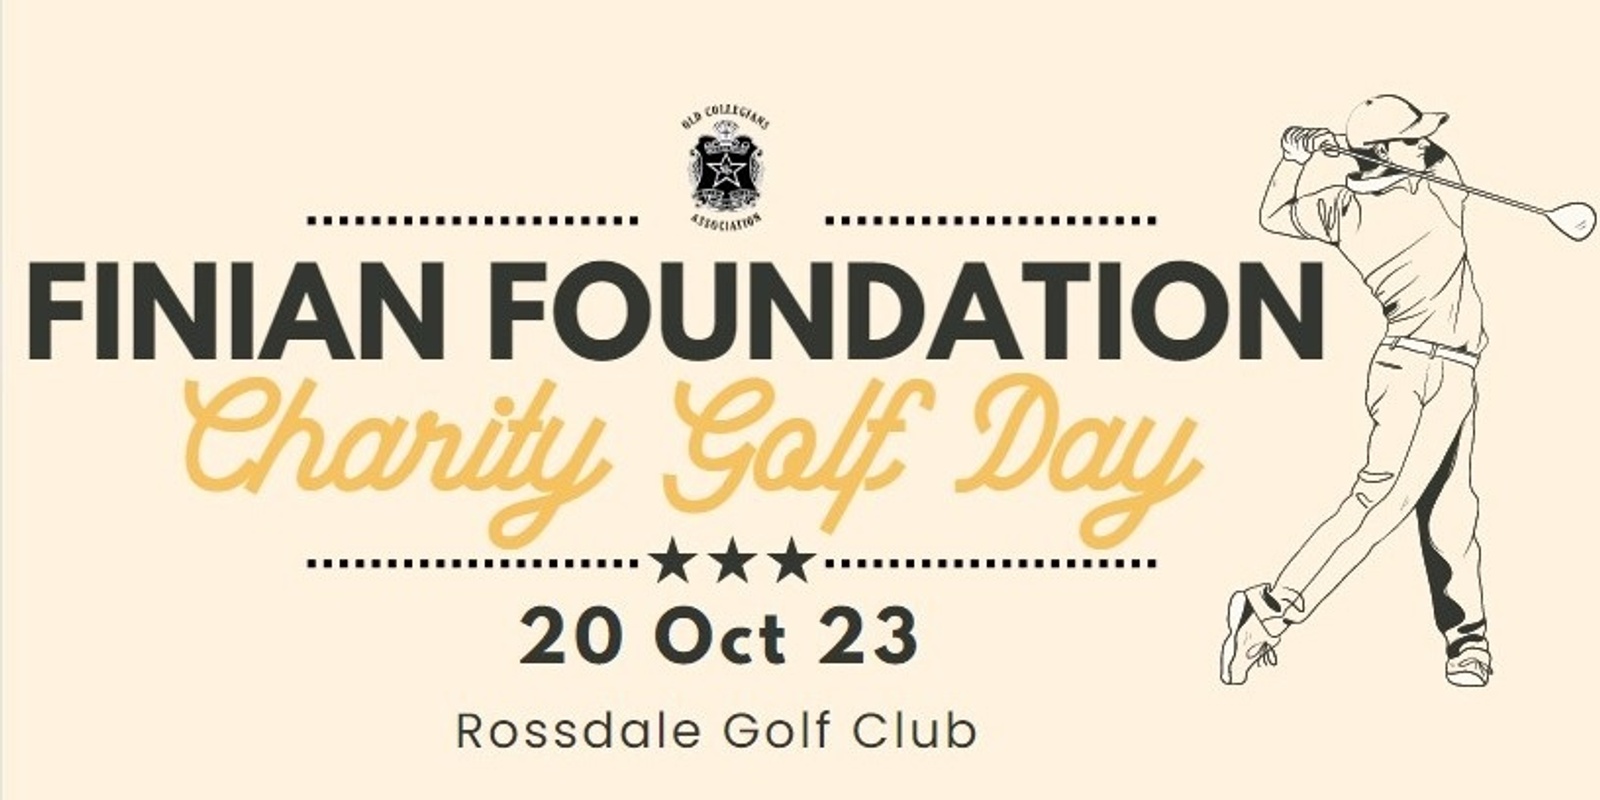 Finian Foundation Charity Golf Day 2023